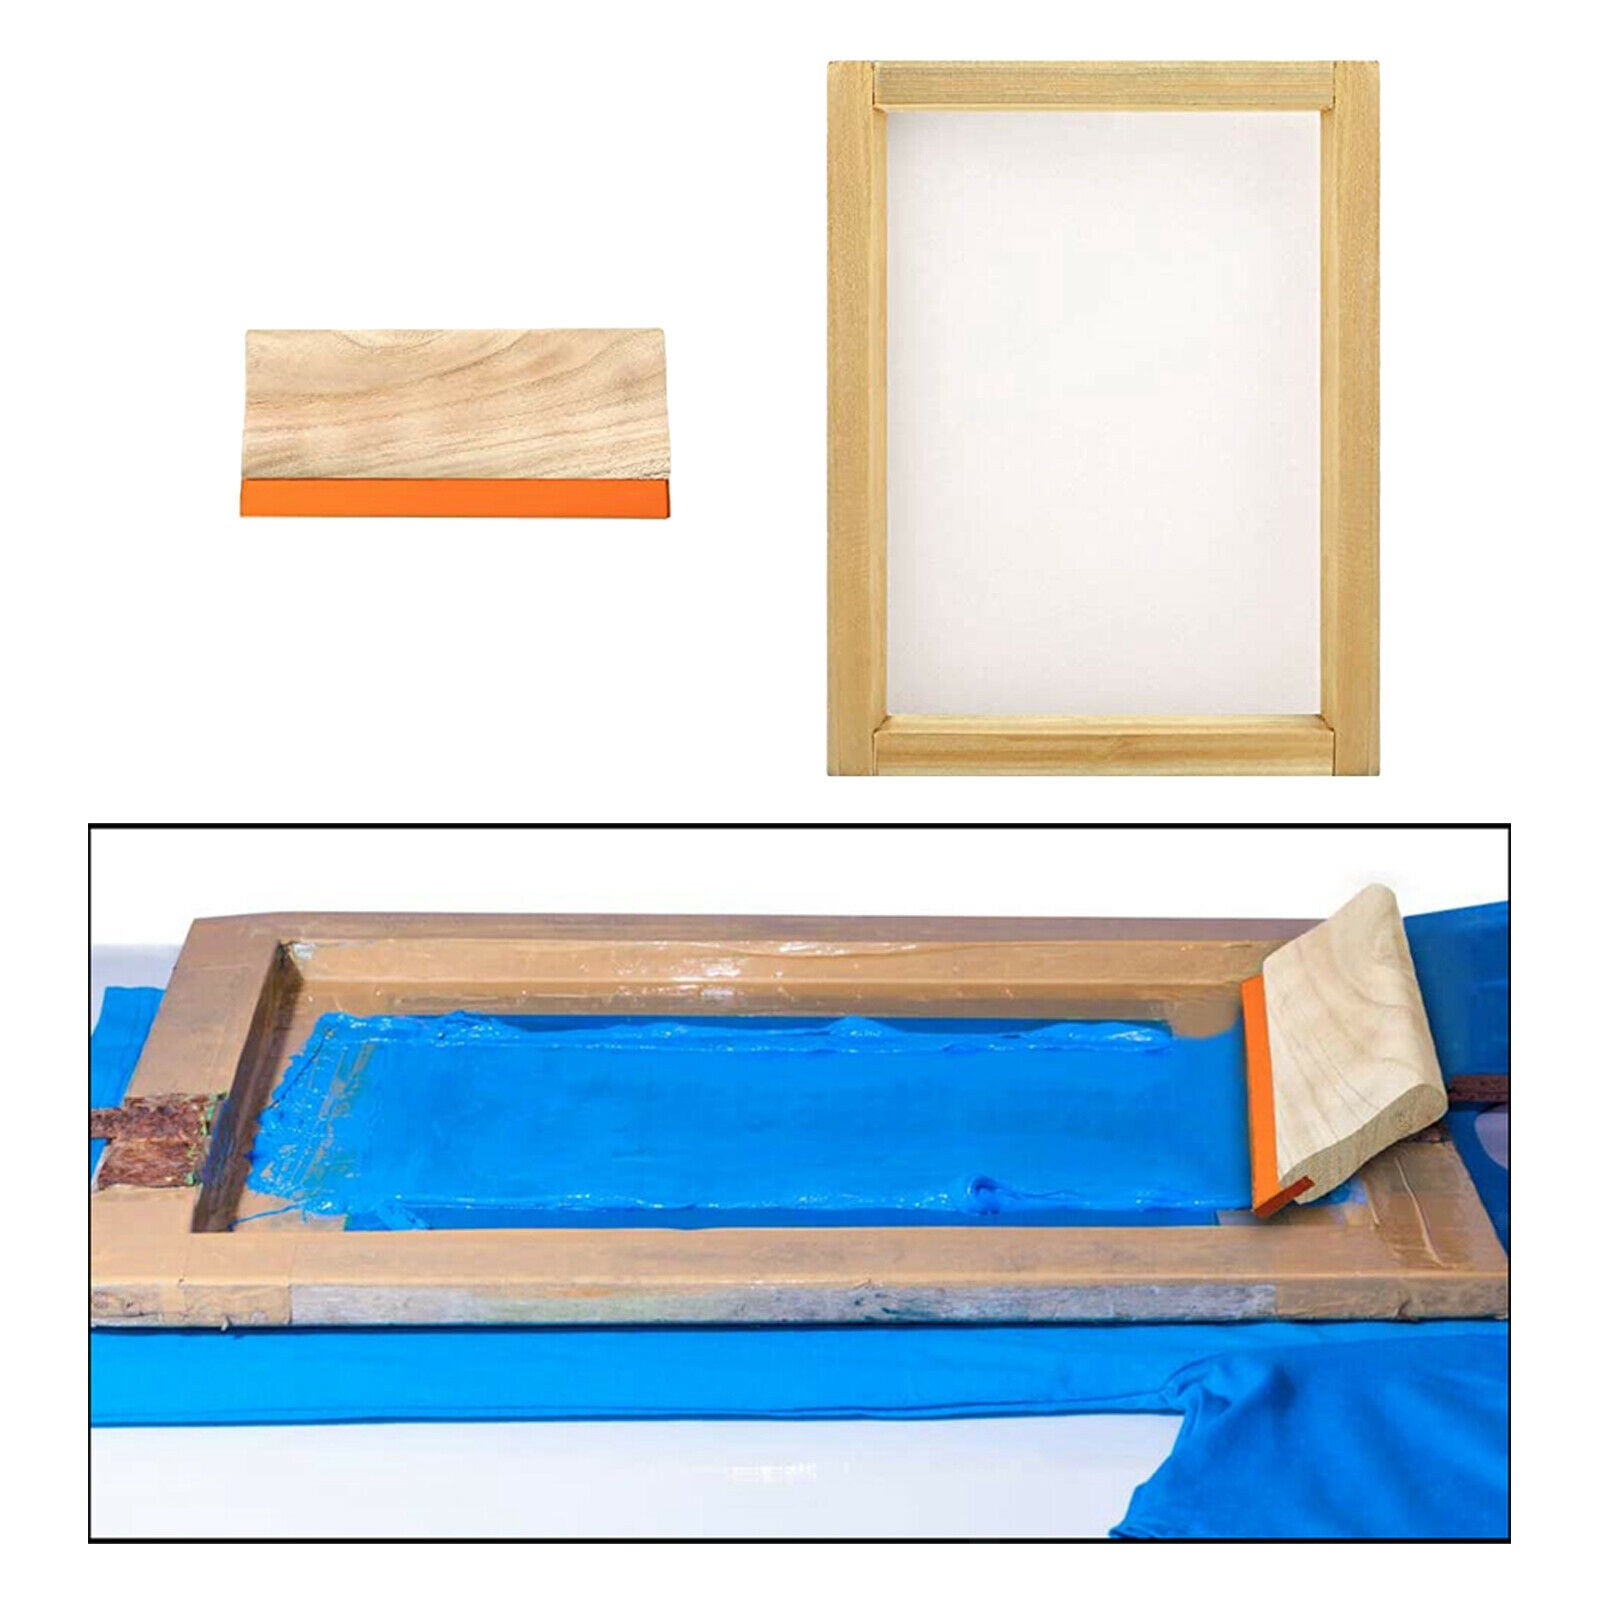 10x14inch Large Wood Silk Screen Printing Frame w/ Screen Printing Squeegee